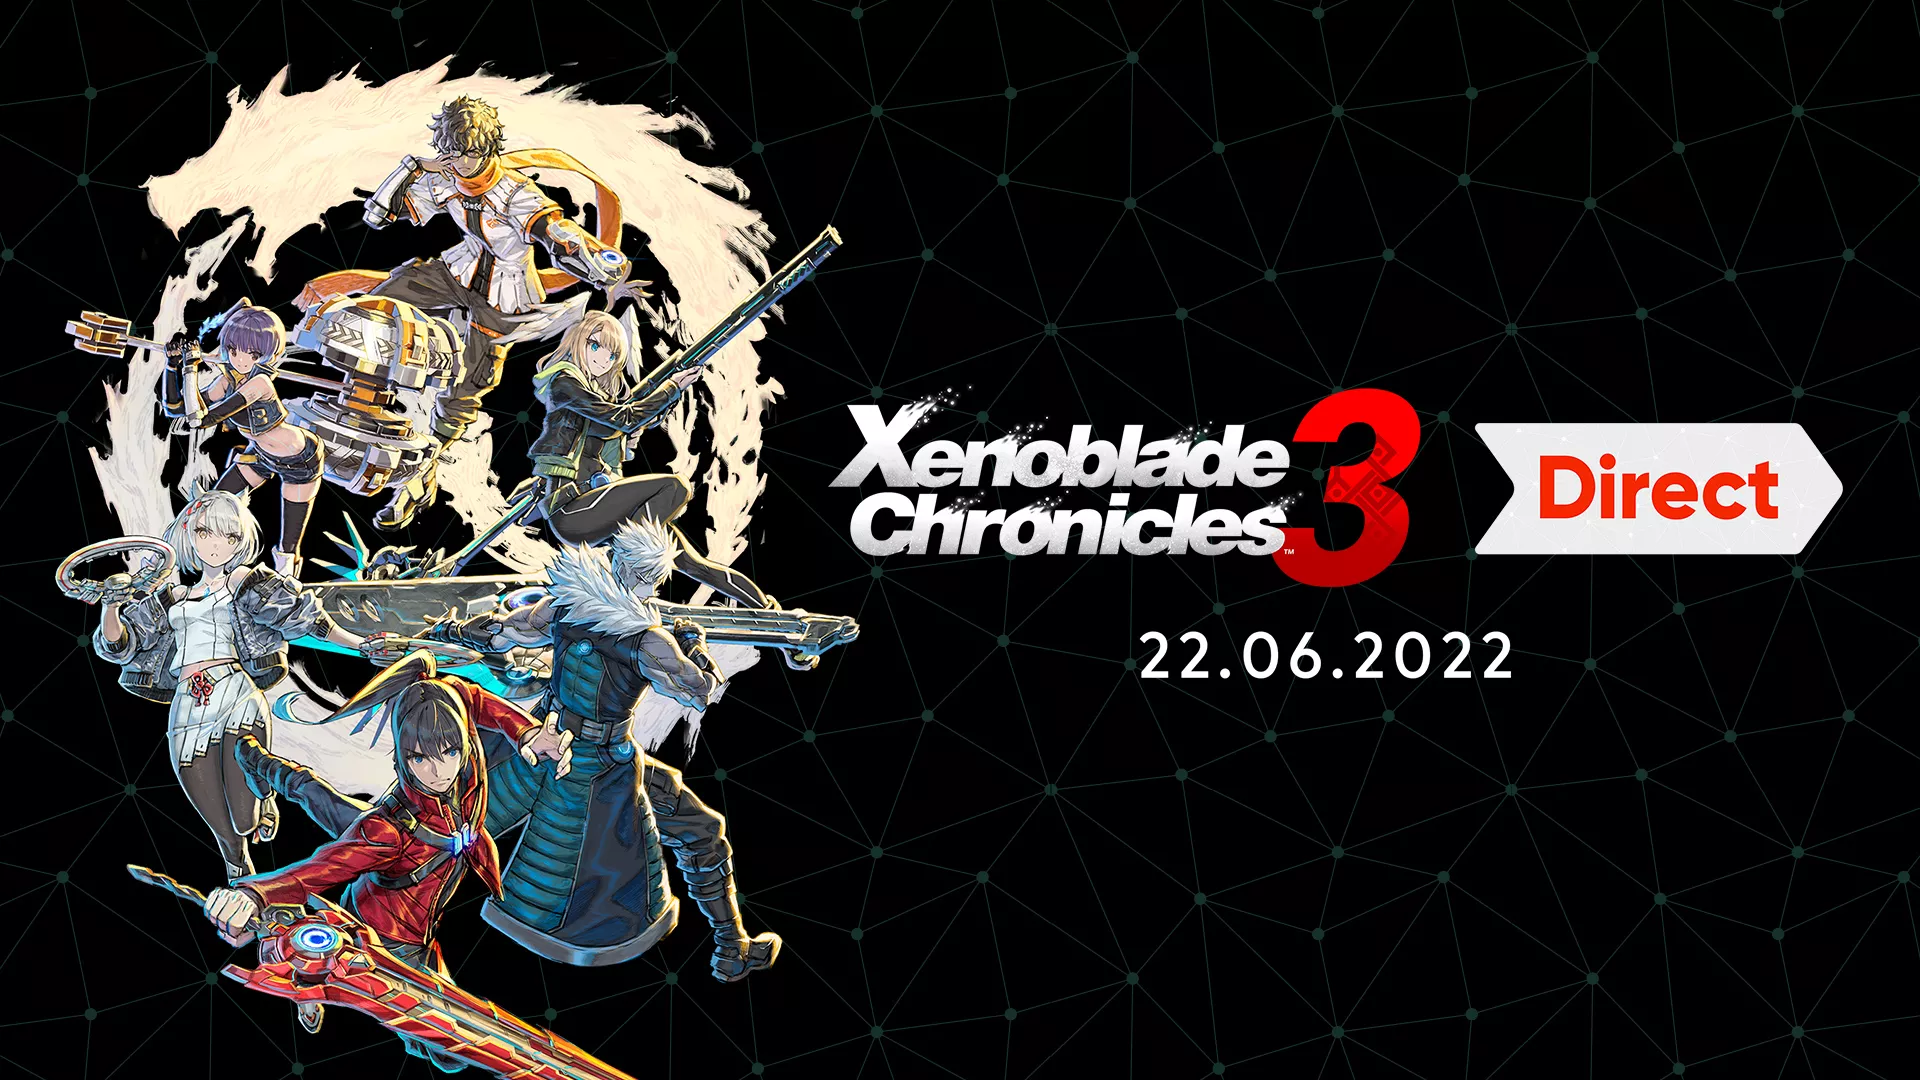 Xenoblade Chronicles 3 Direct angekündigt Heropic